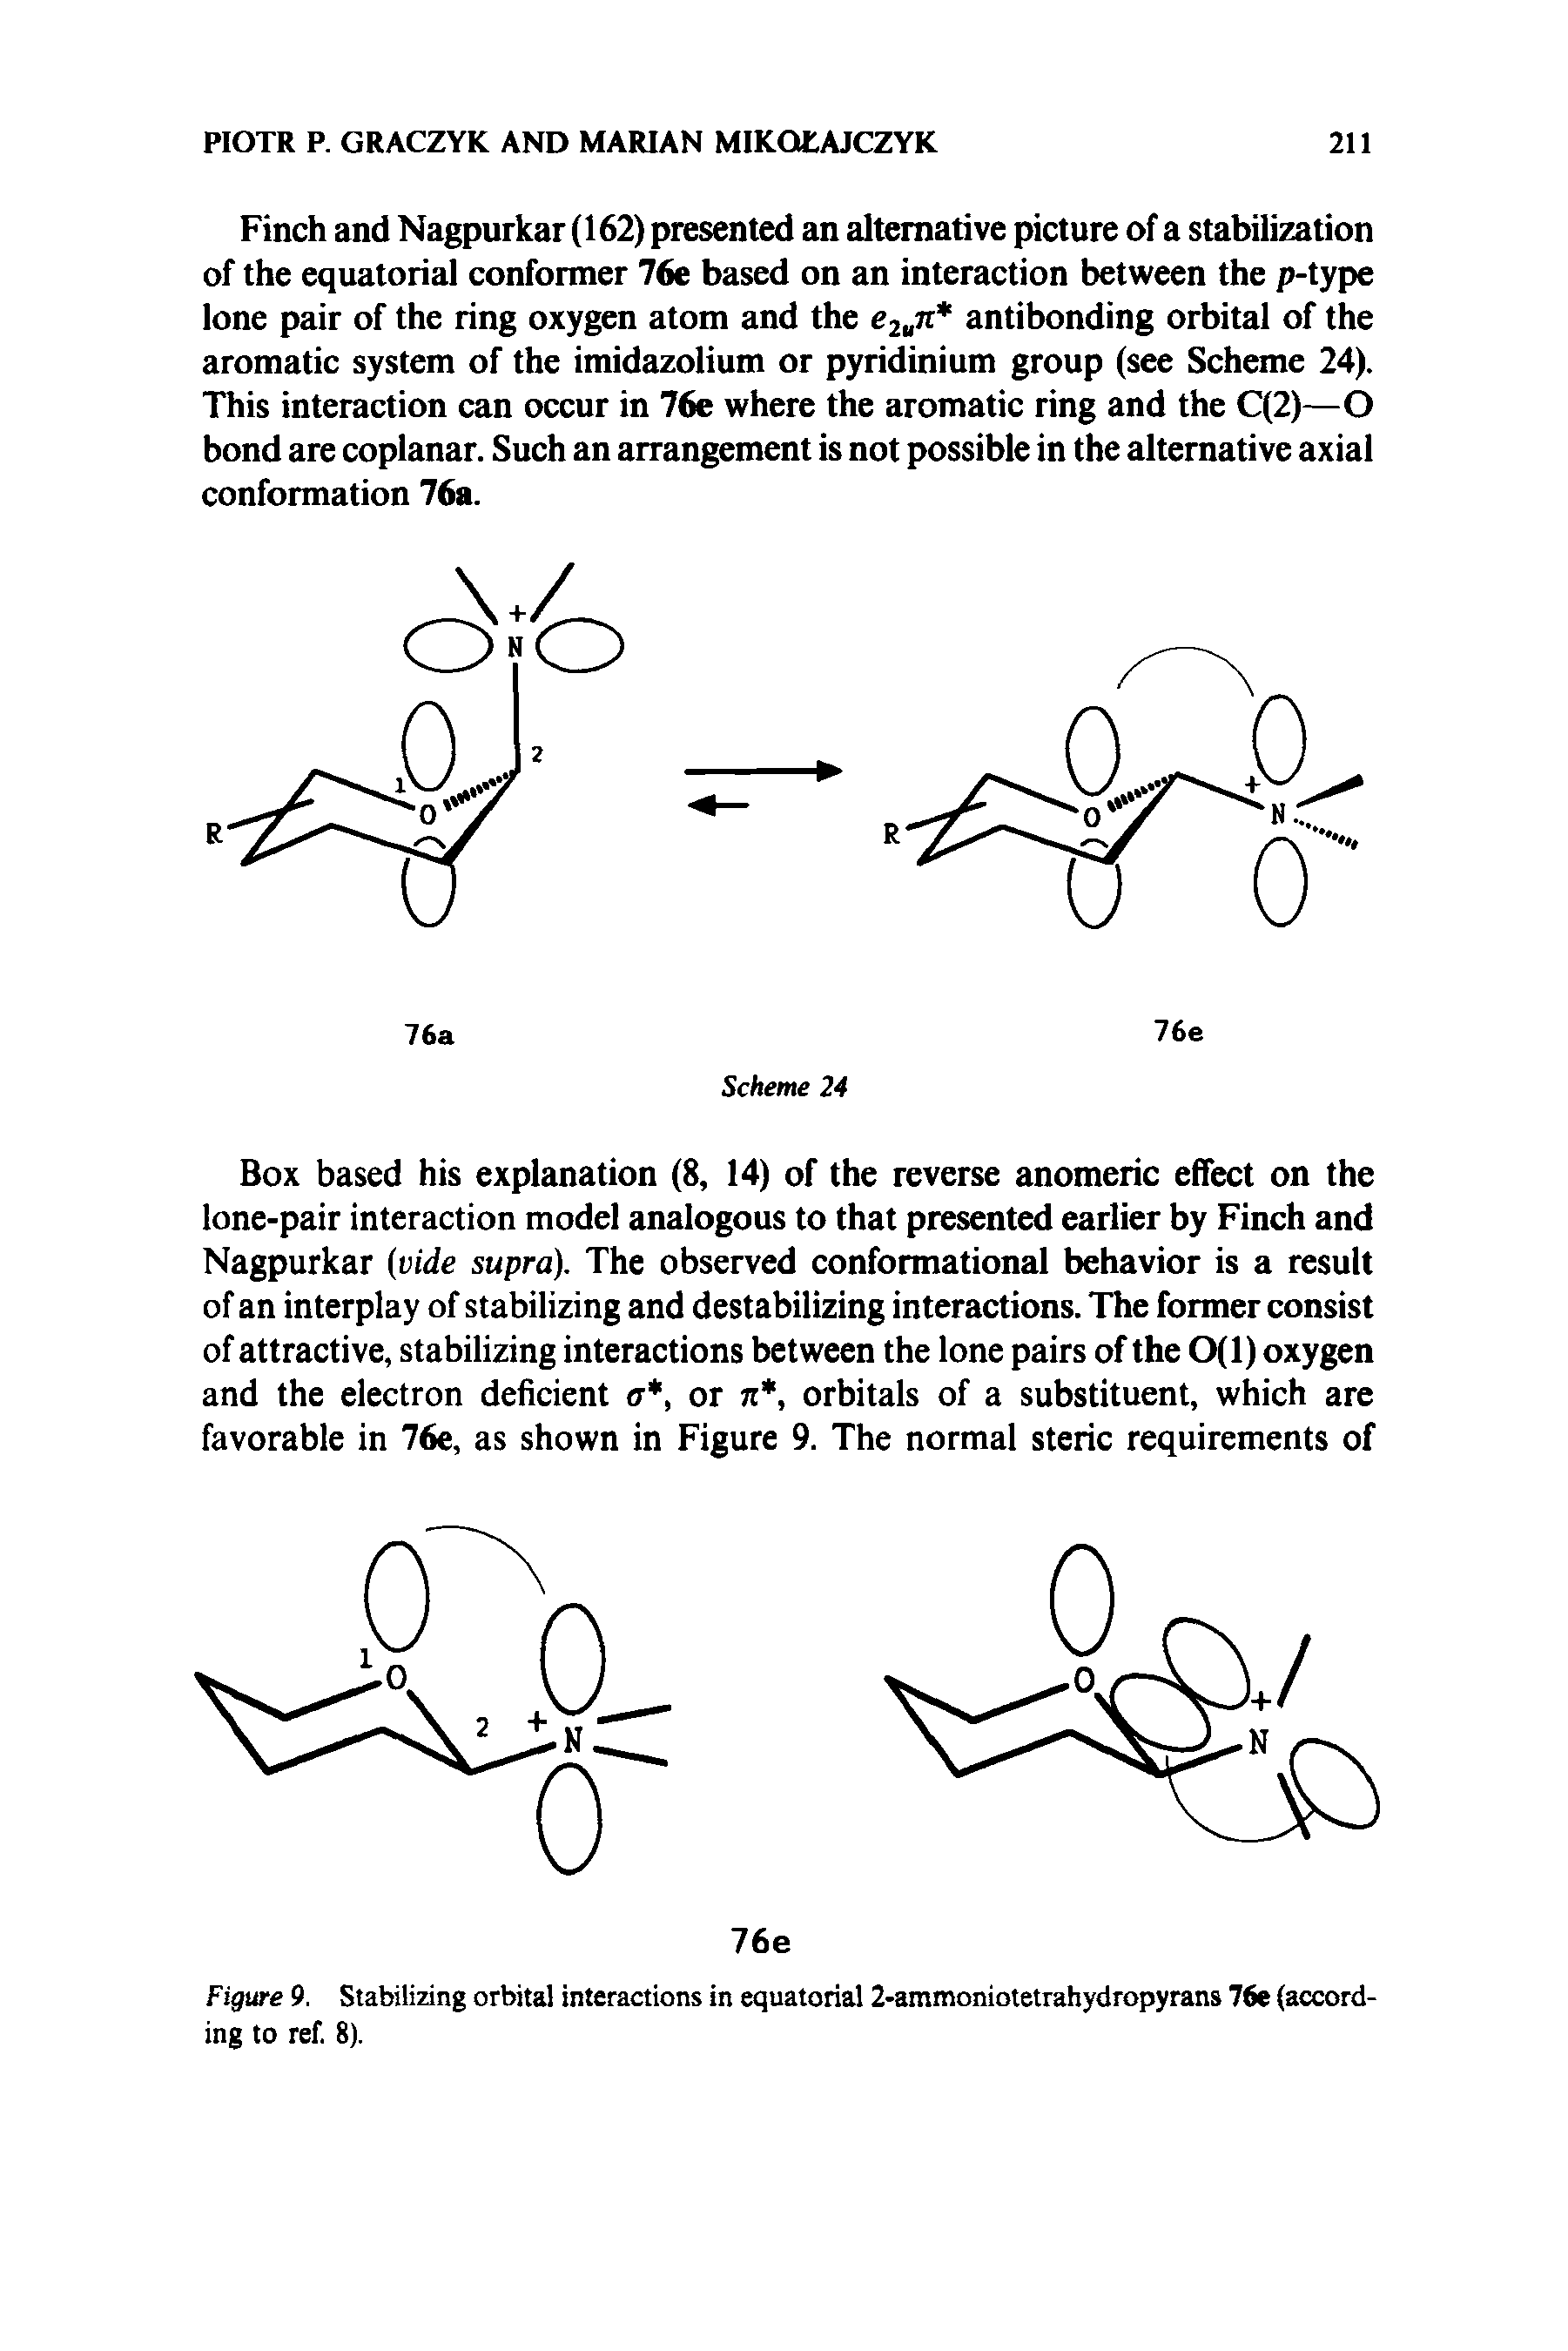 Figure 9. Stabilizing orbital interactions in equatorial 2-ammoniotetrahydropyrans 76e (according to ref. 8).